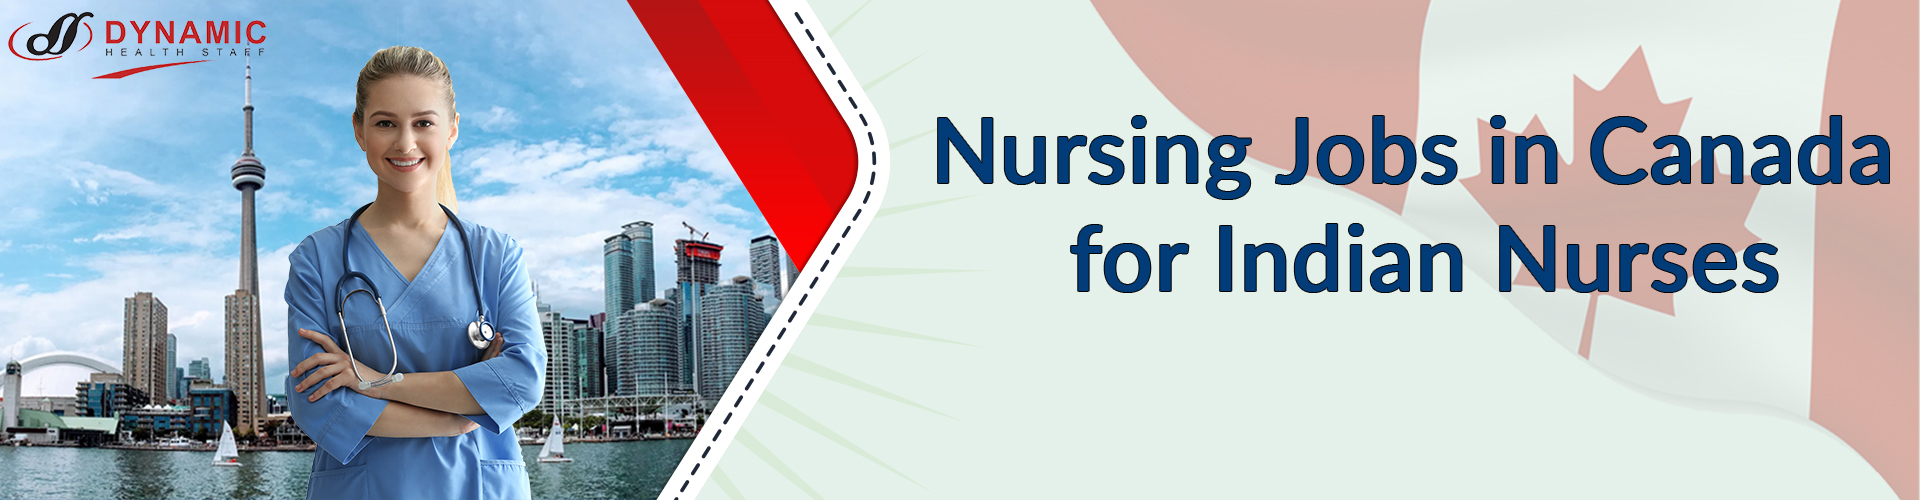 Nursing Jobs in Canada for Indian Nurses